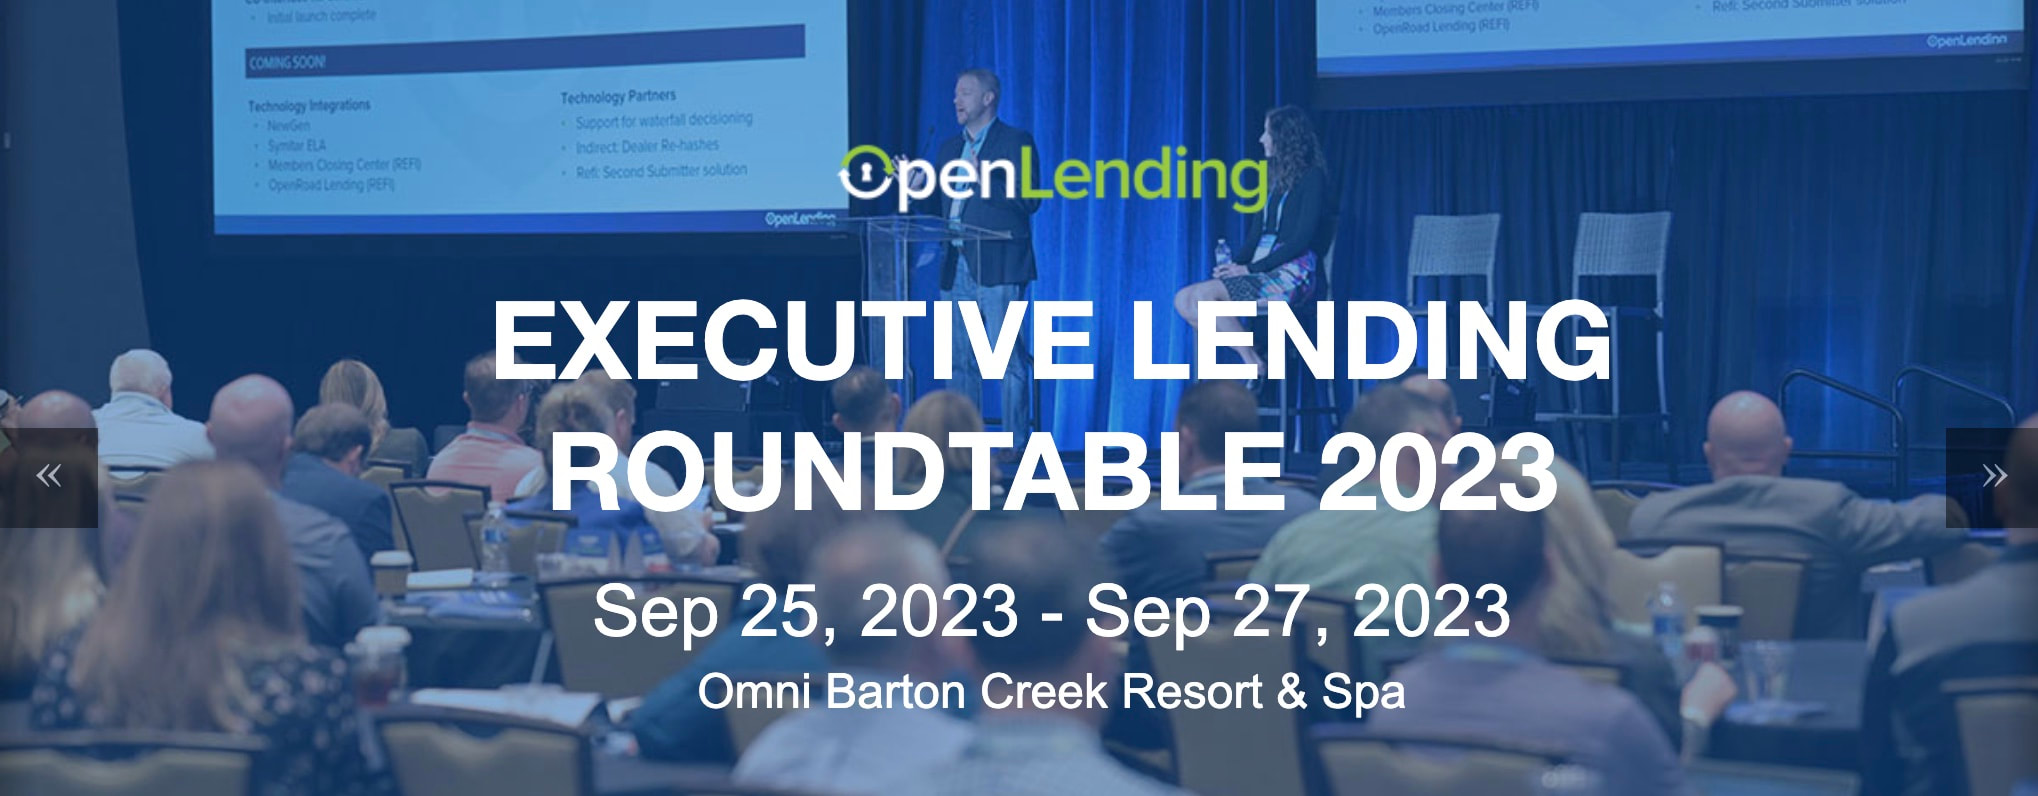 Open Lending Executive Lending Roundtable